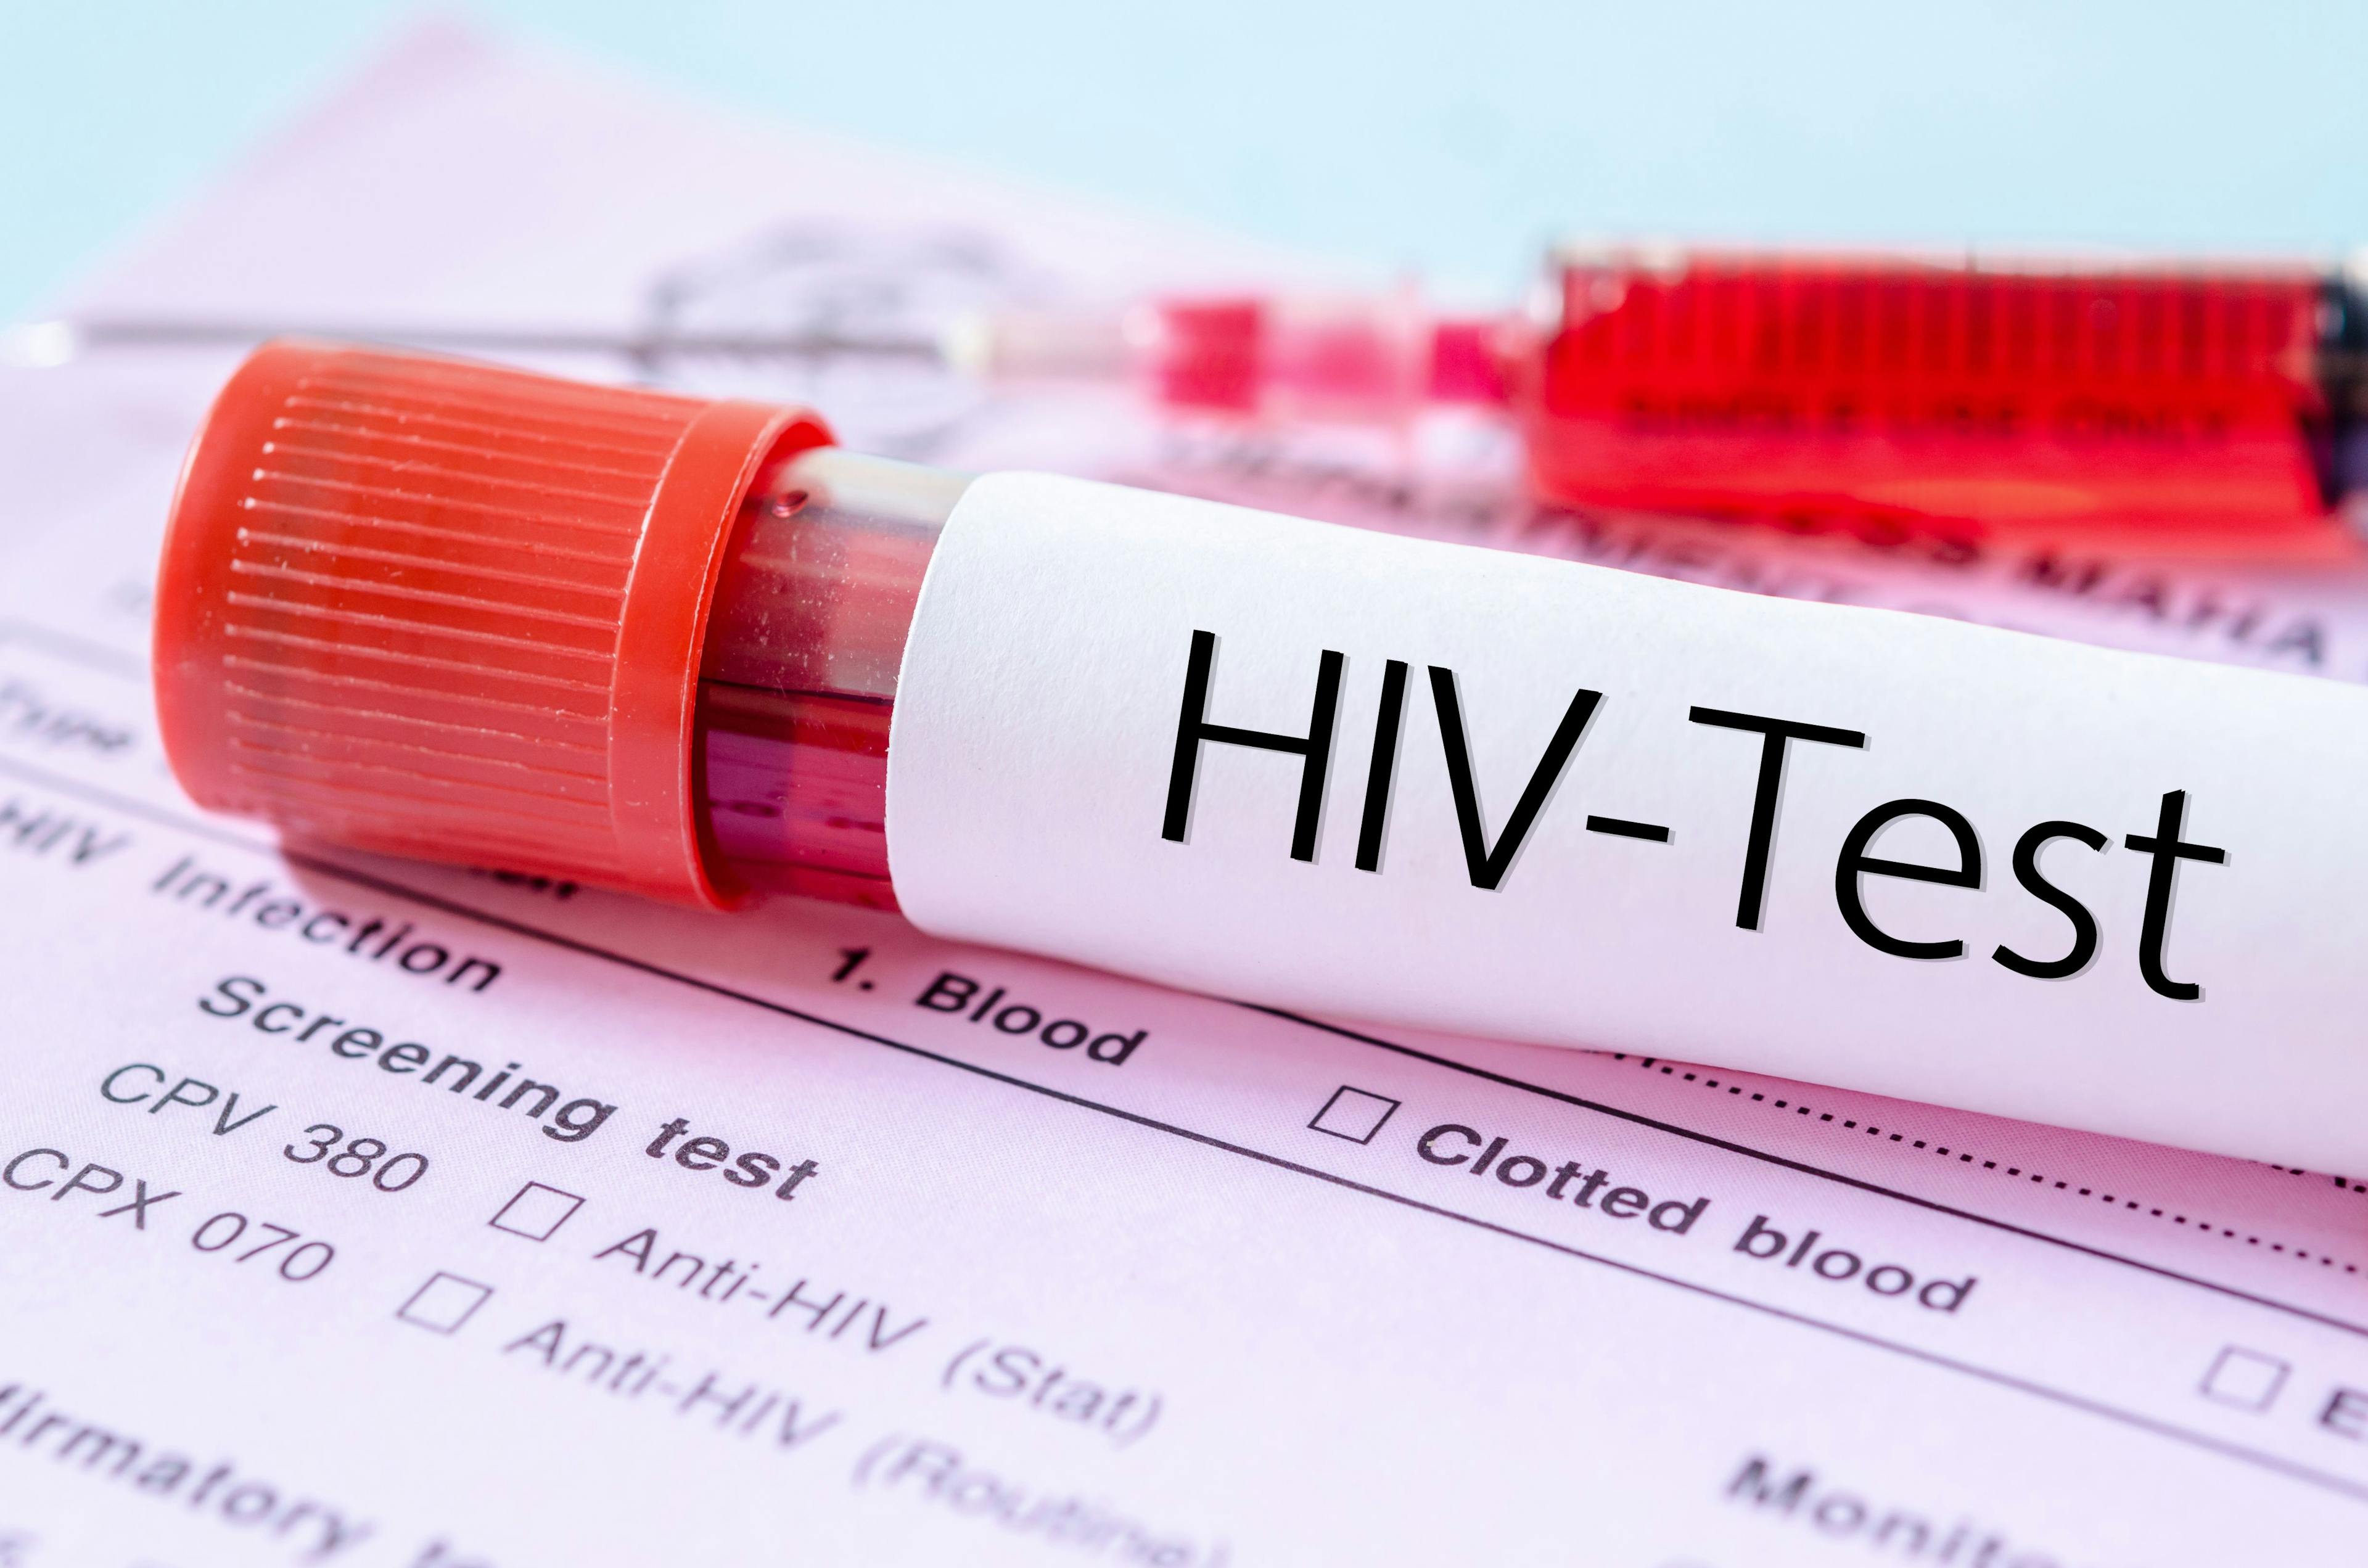 HIV test label on HIV infection screening test form. | Image Credit: gamjai - stock.adobe.com